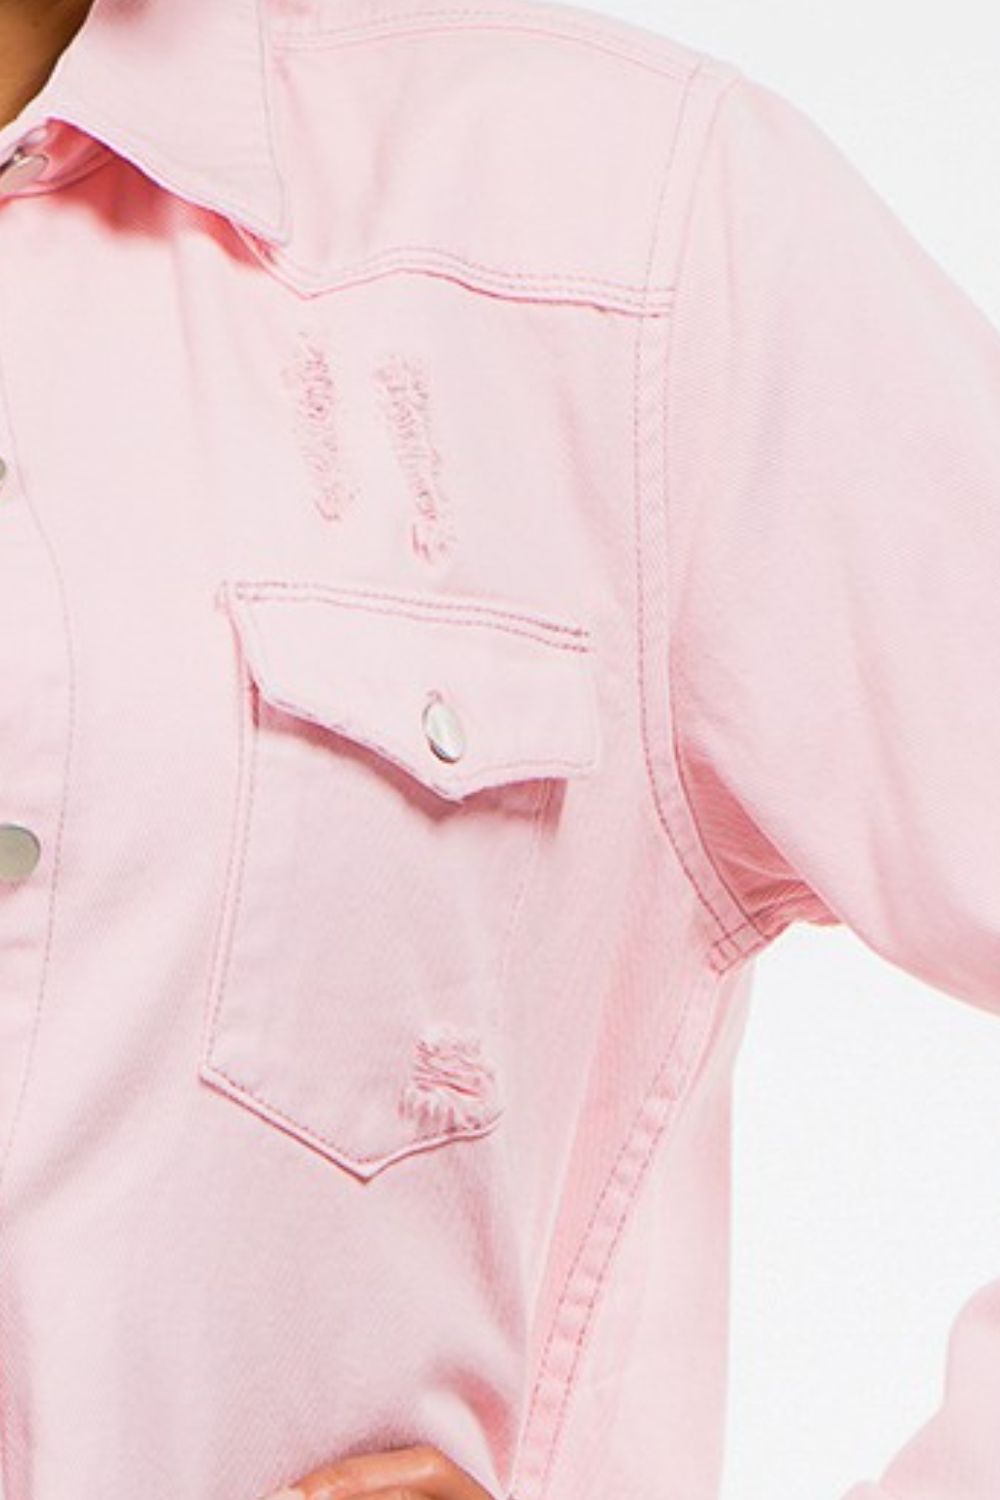 American Bazi Frayed Hem Distressed Pink Denim Jacket